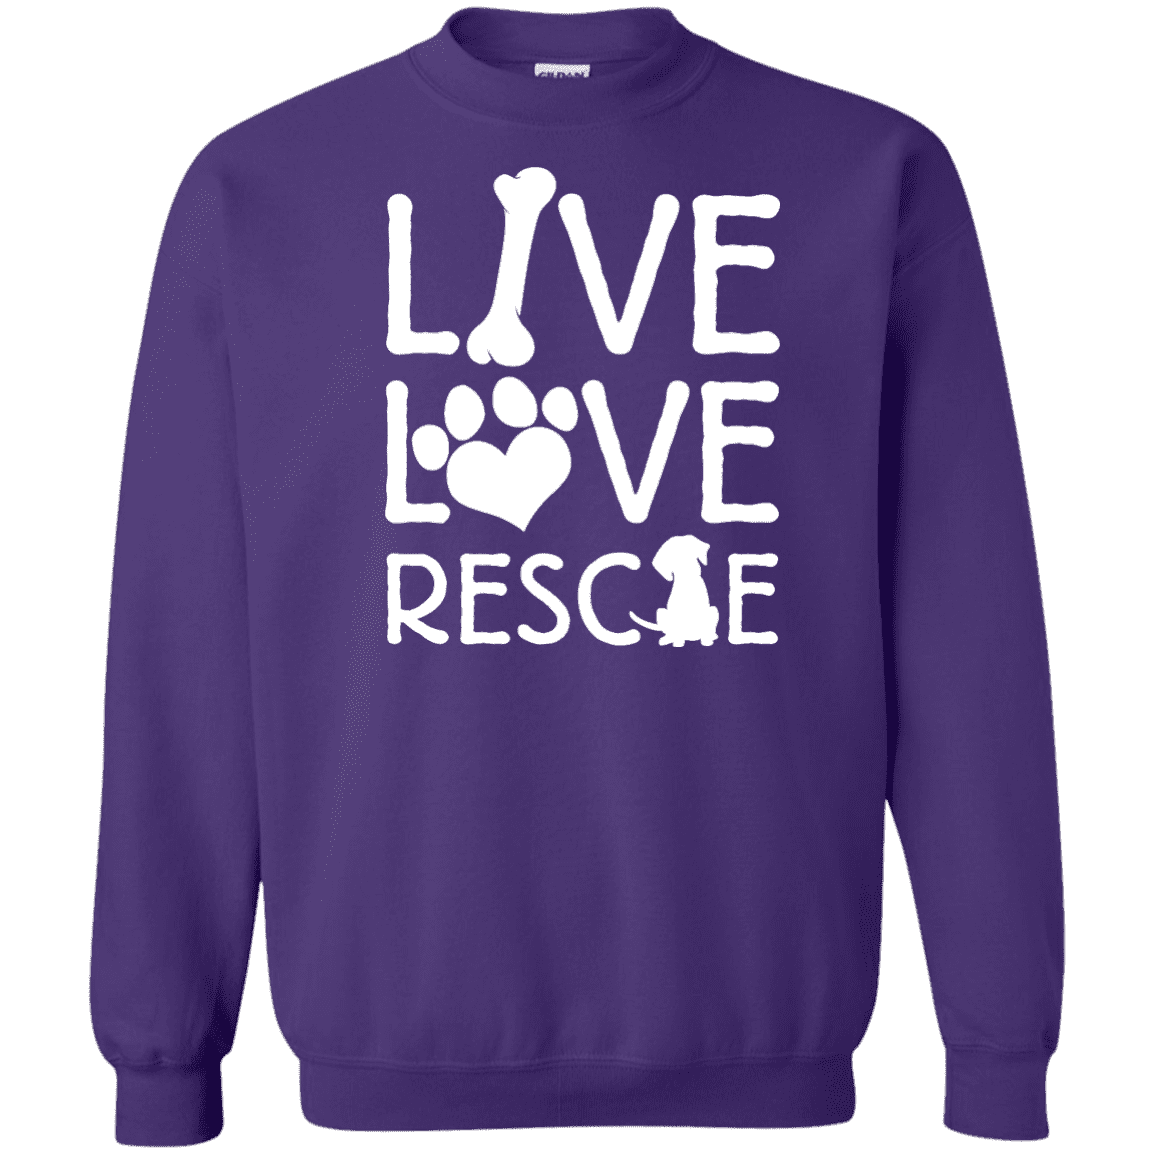 Live Love Rescue - Sweatshirt.